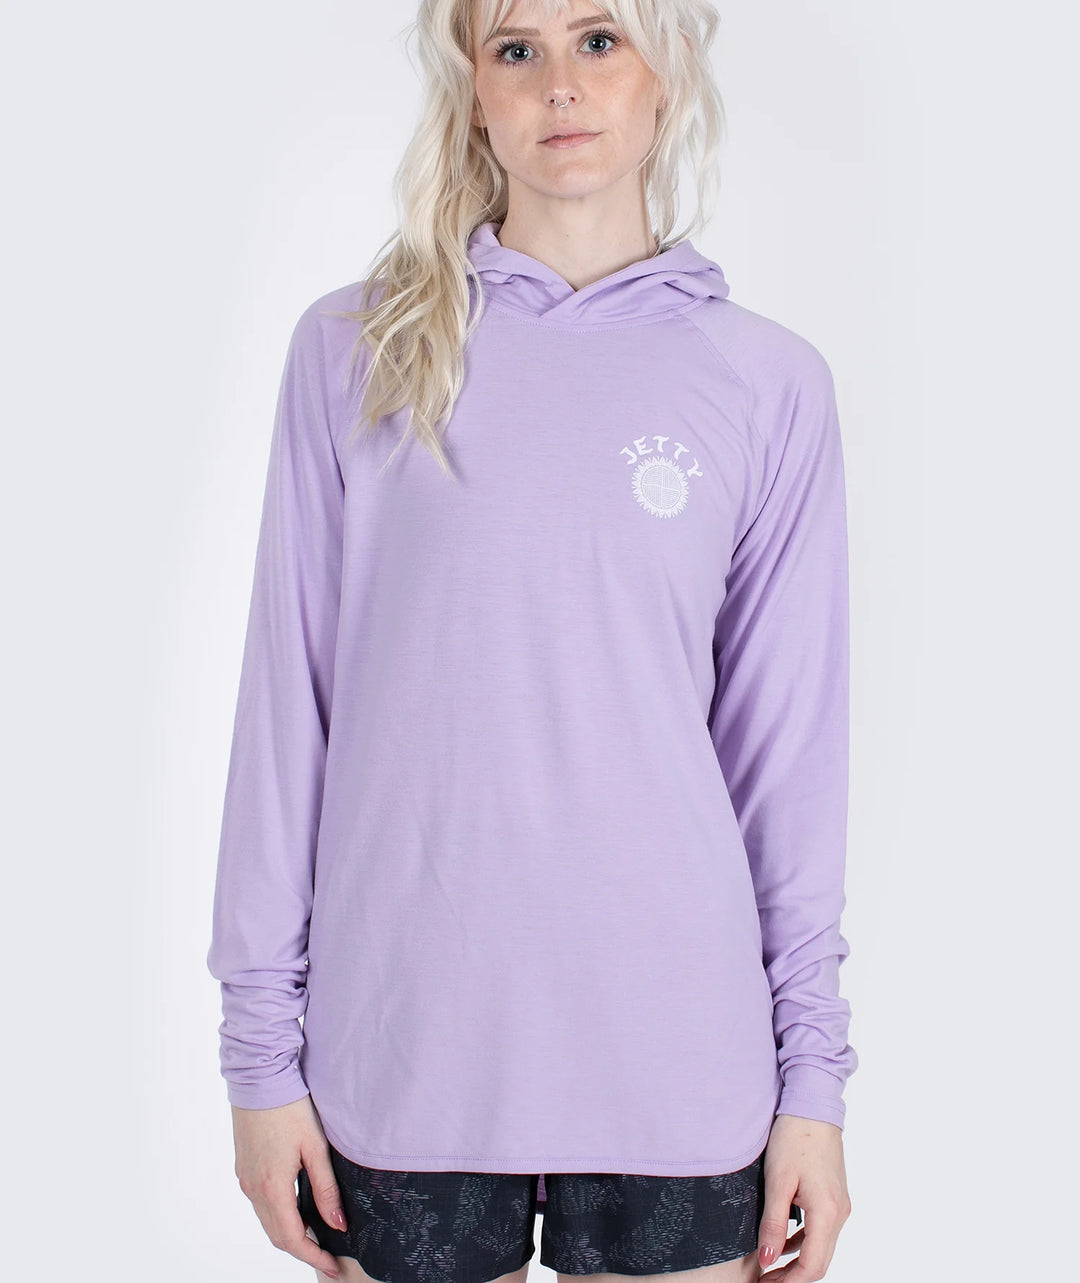 Radial Hooded UV Shirt - Lavender - Sun Diego Boardshop